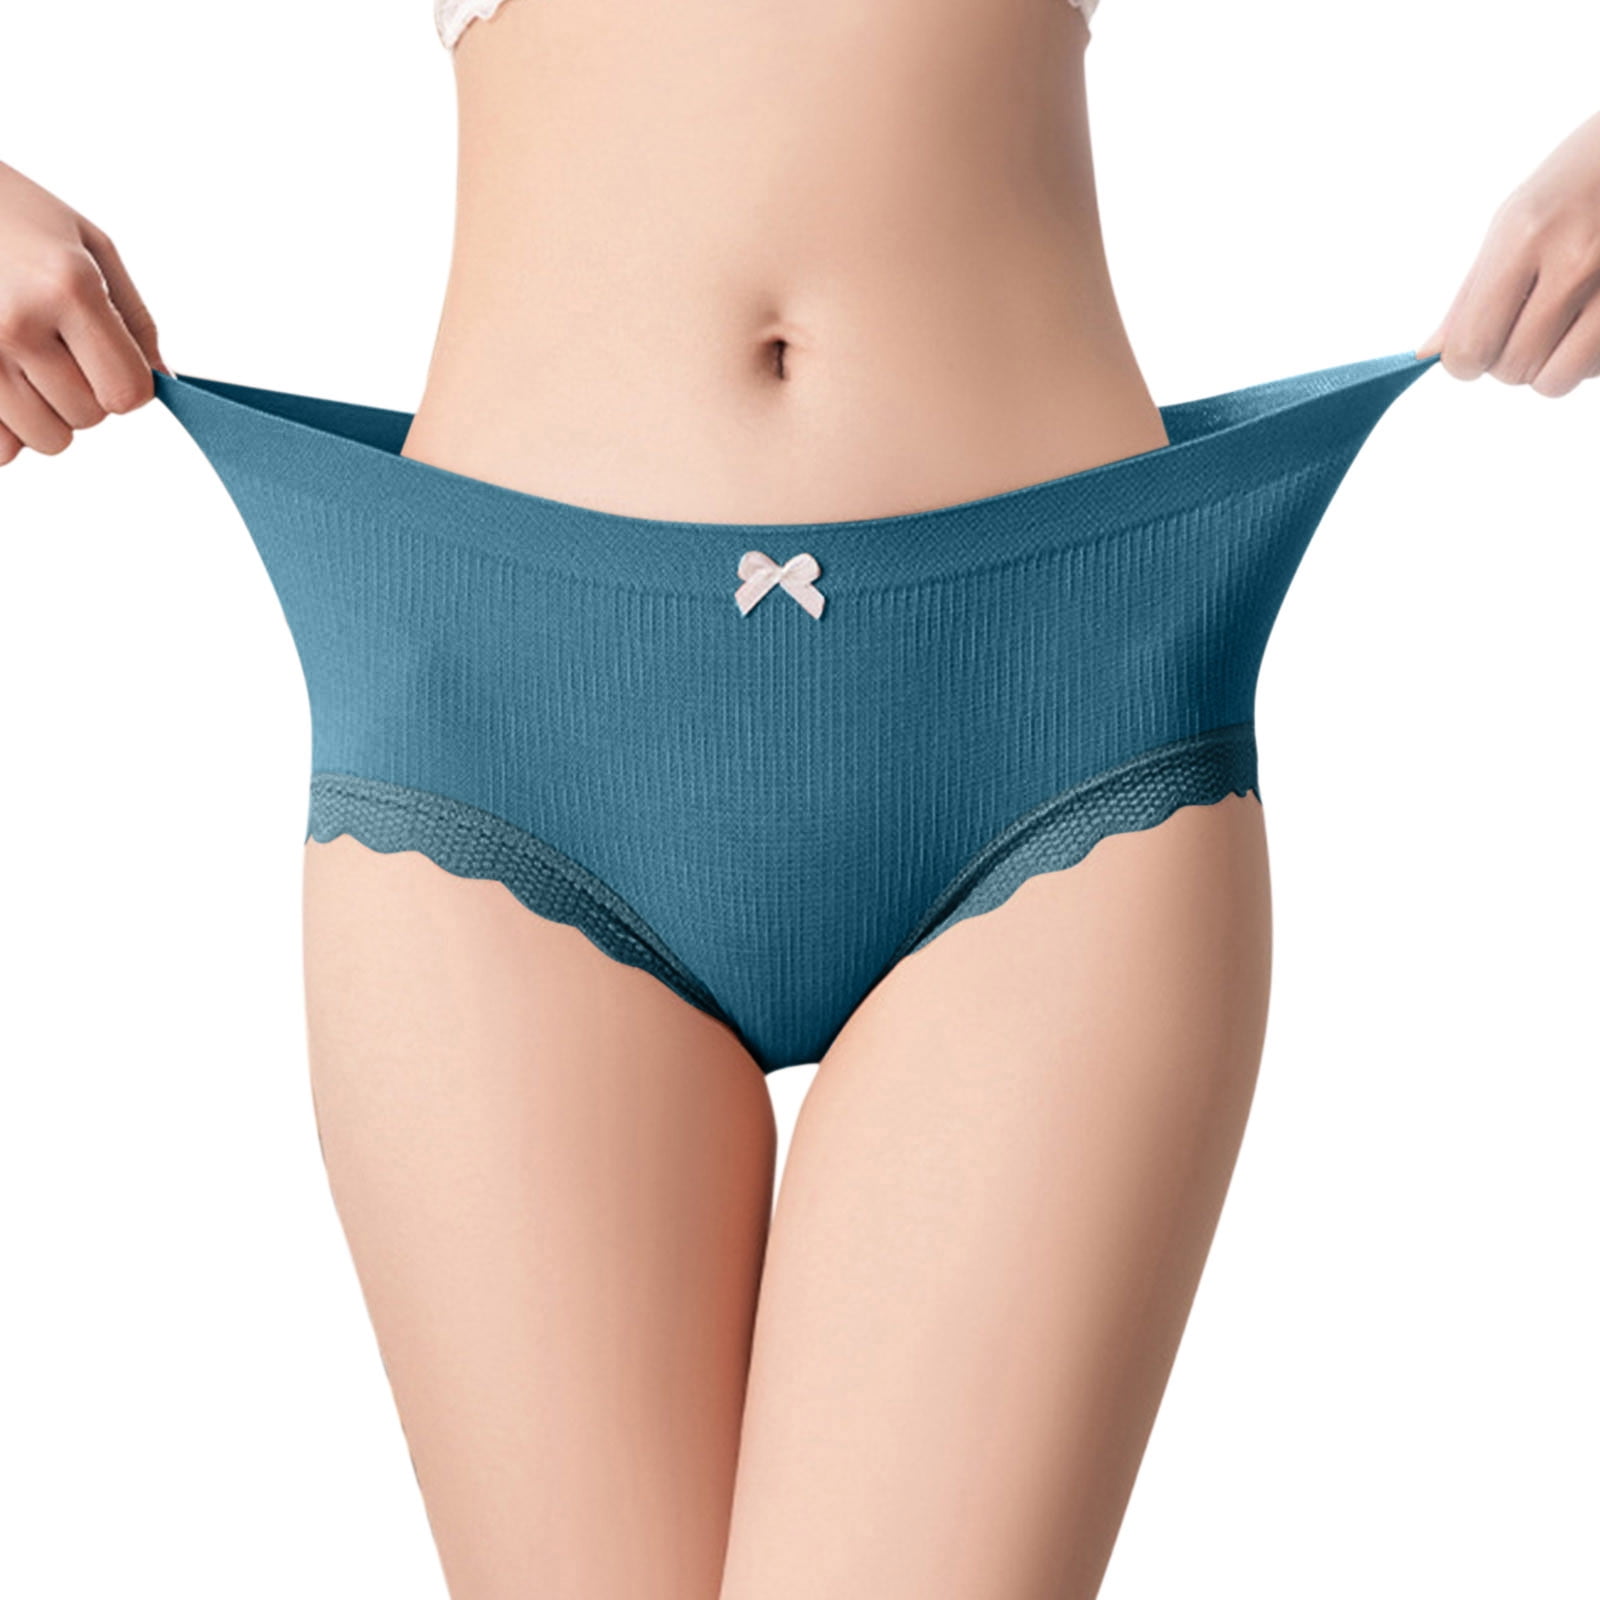 zuwimk Thongs For Women ,Women's Breathable Seamless Thong Panties